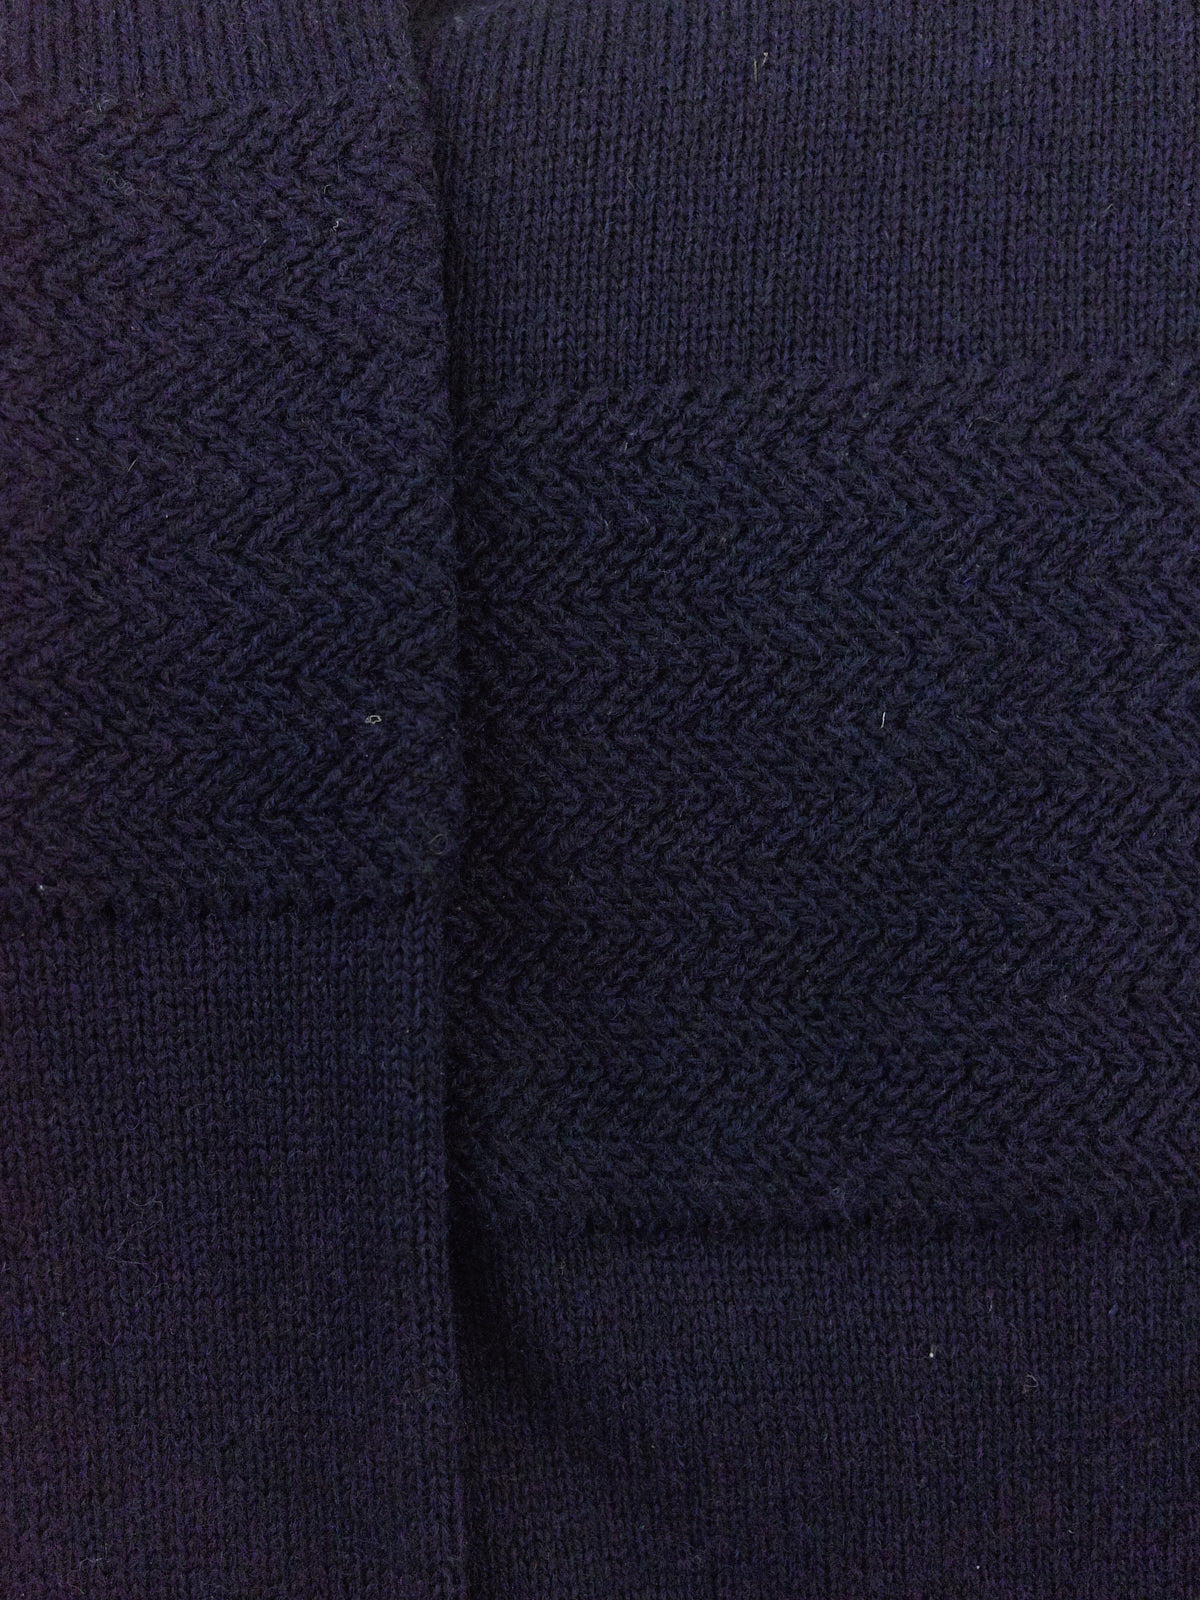 Comme des Garcons Homme Plus 1980s navy wool patterned turtleneck jumper - S M